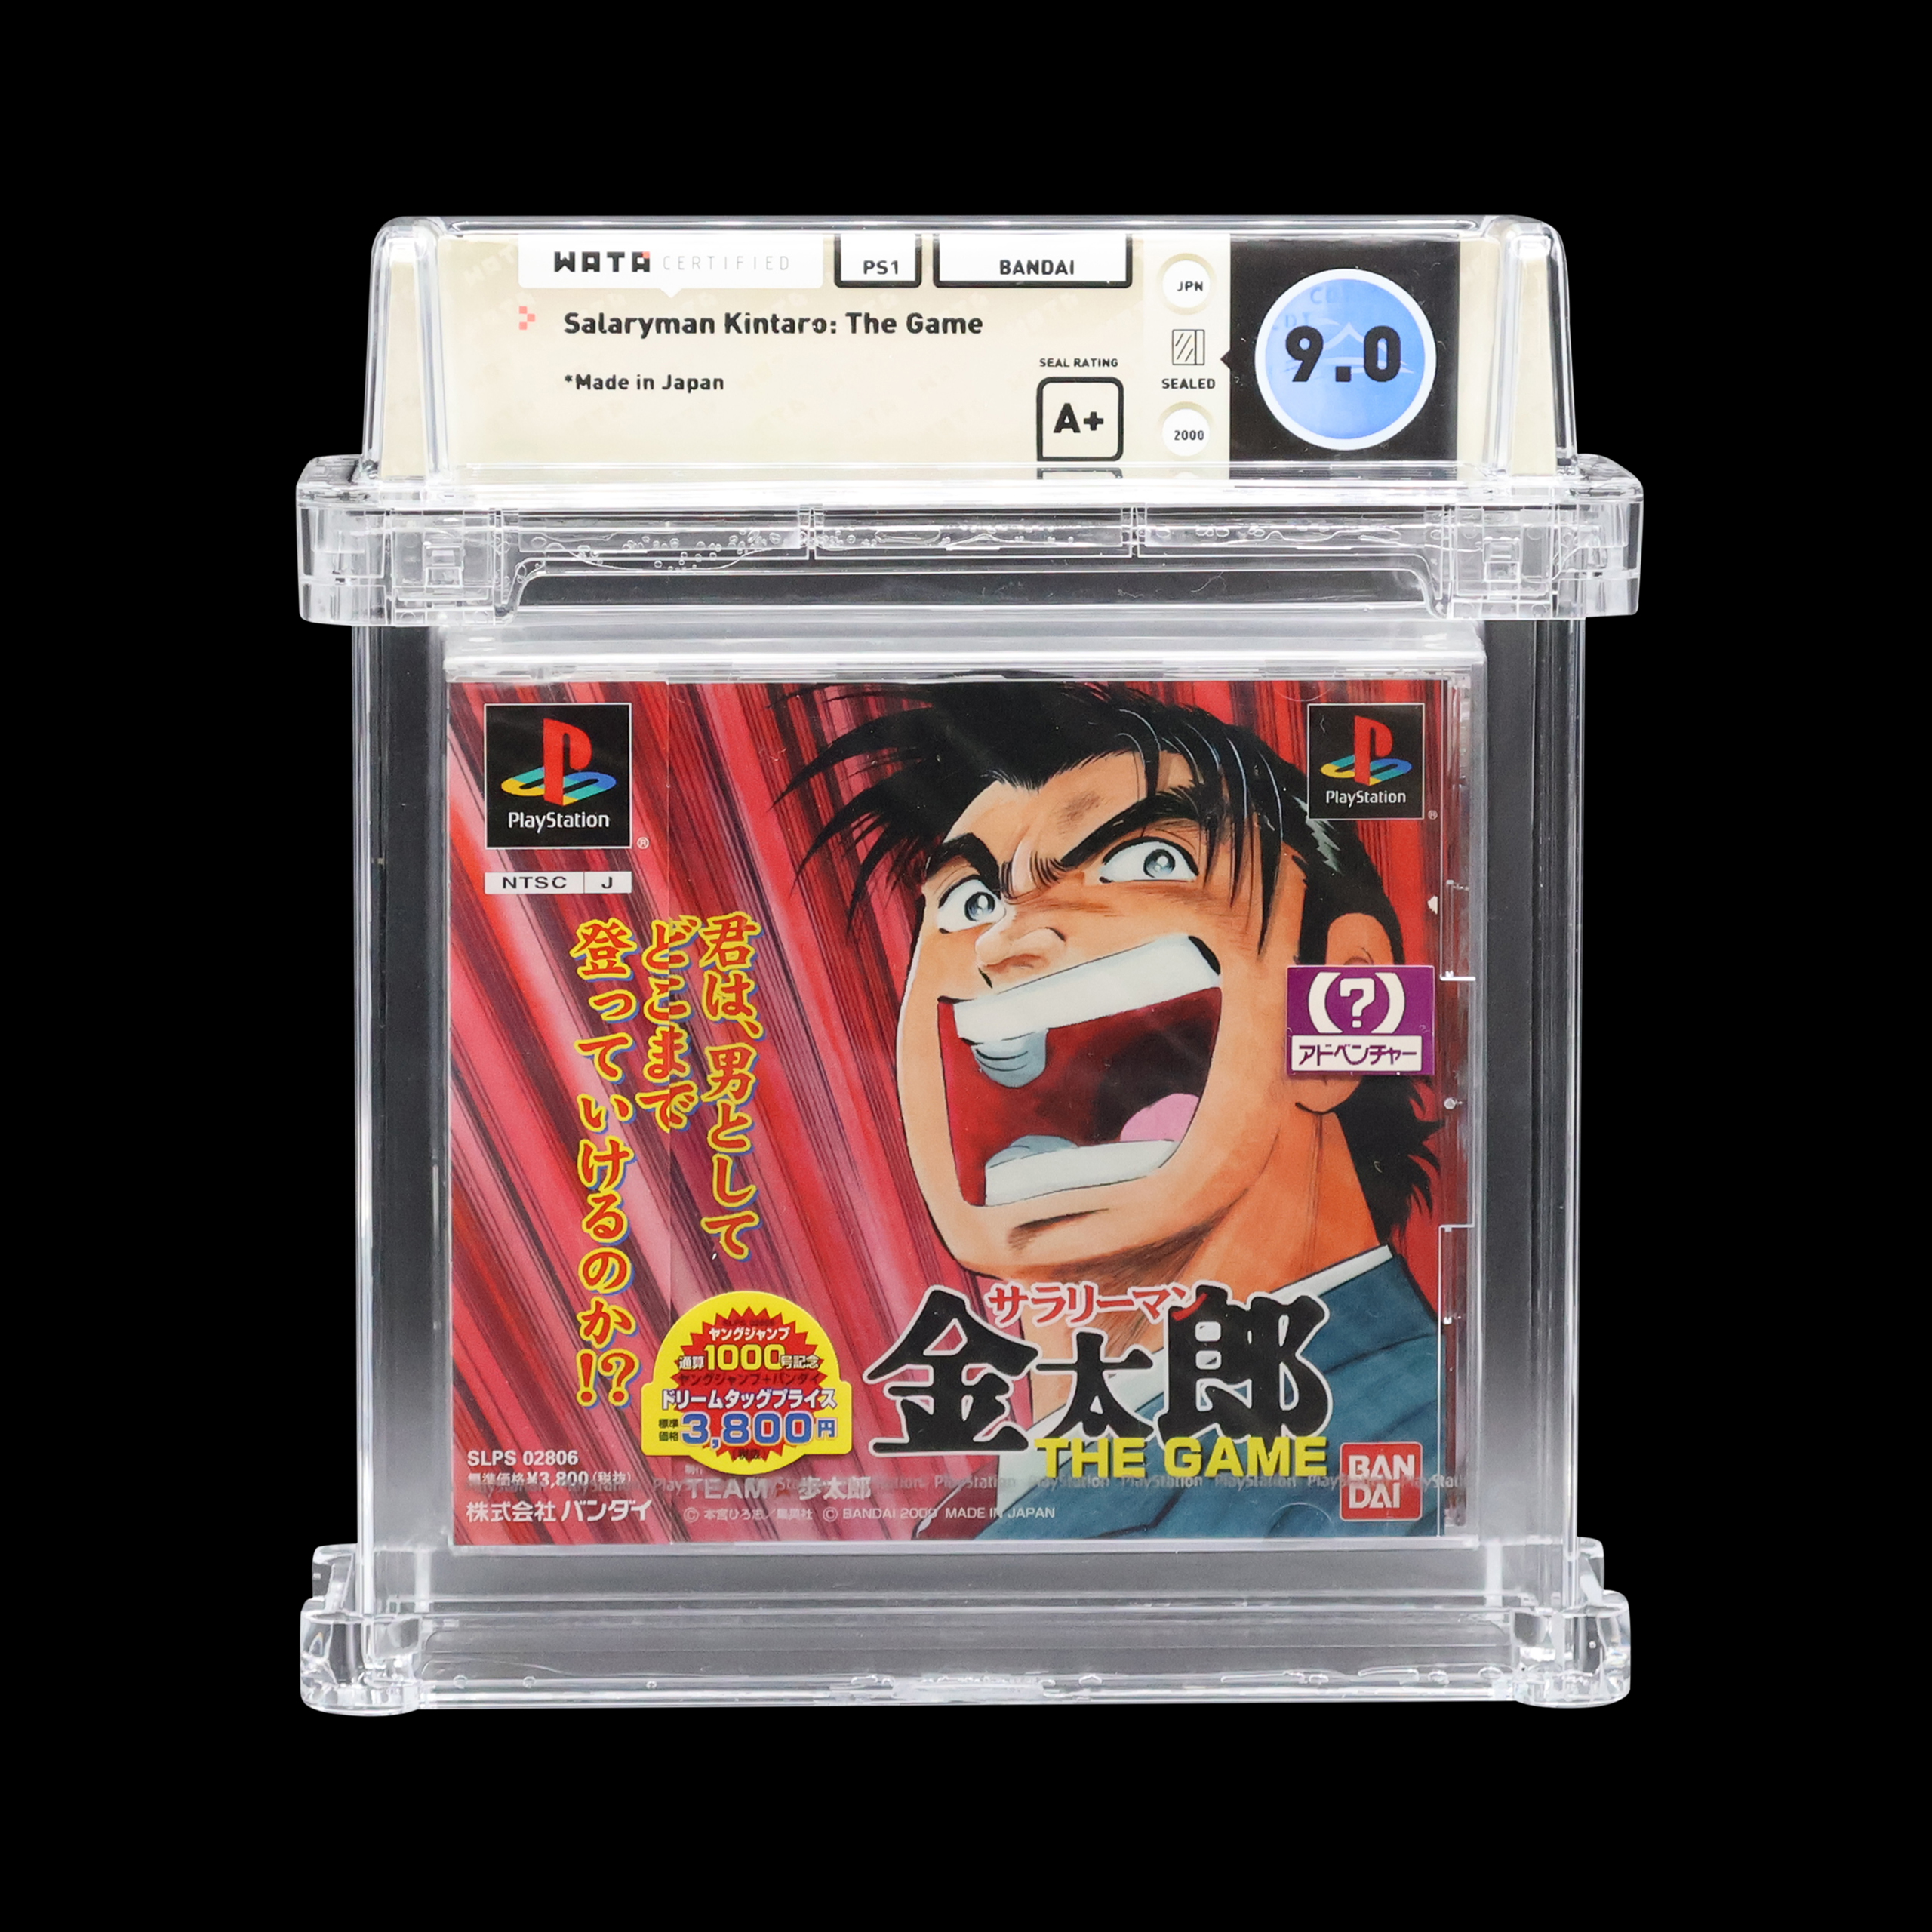 Graded 9.0 Salaryman Kintaro PlayStation game in a WATA protective case.